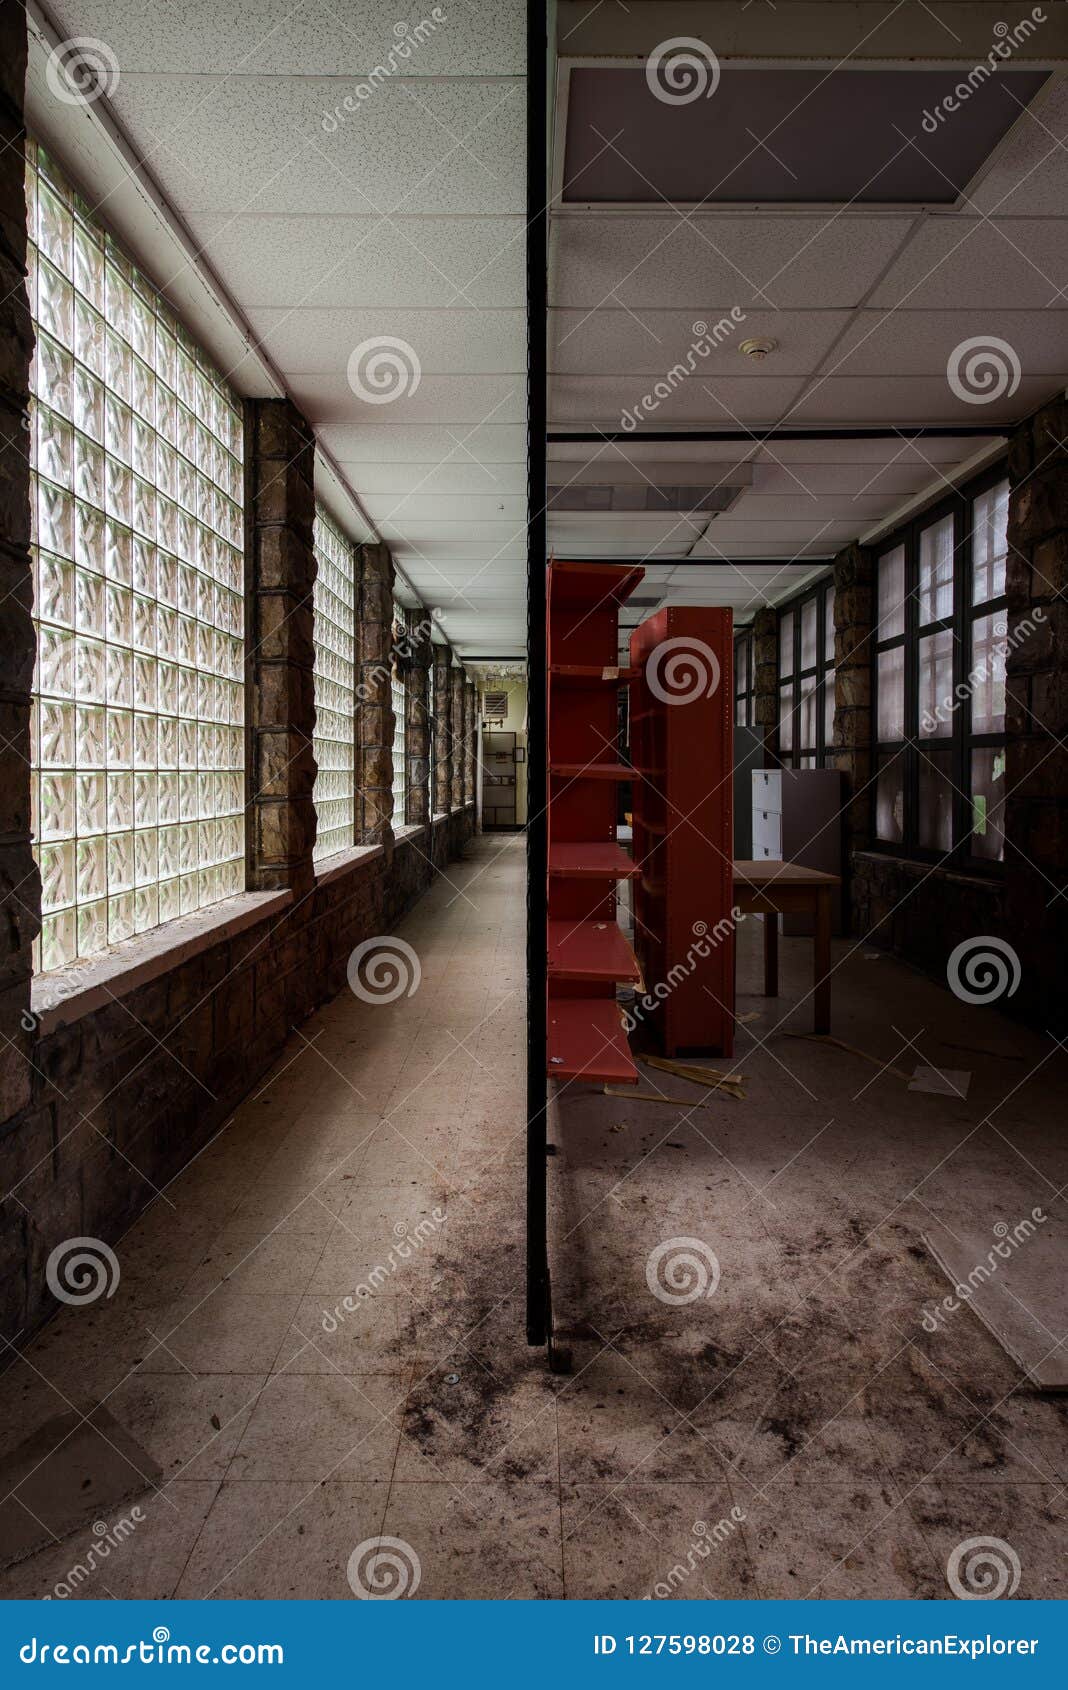 two hallways - sci cresson prison / sanatorium - pennsylvania